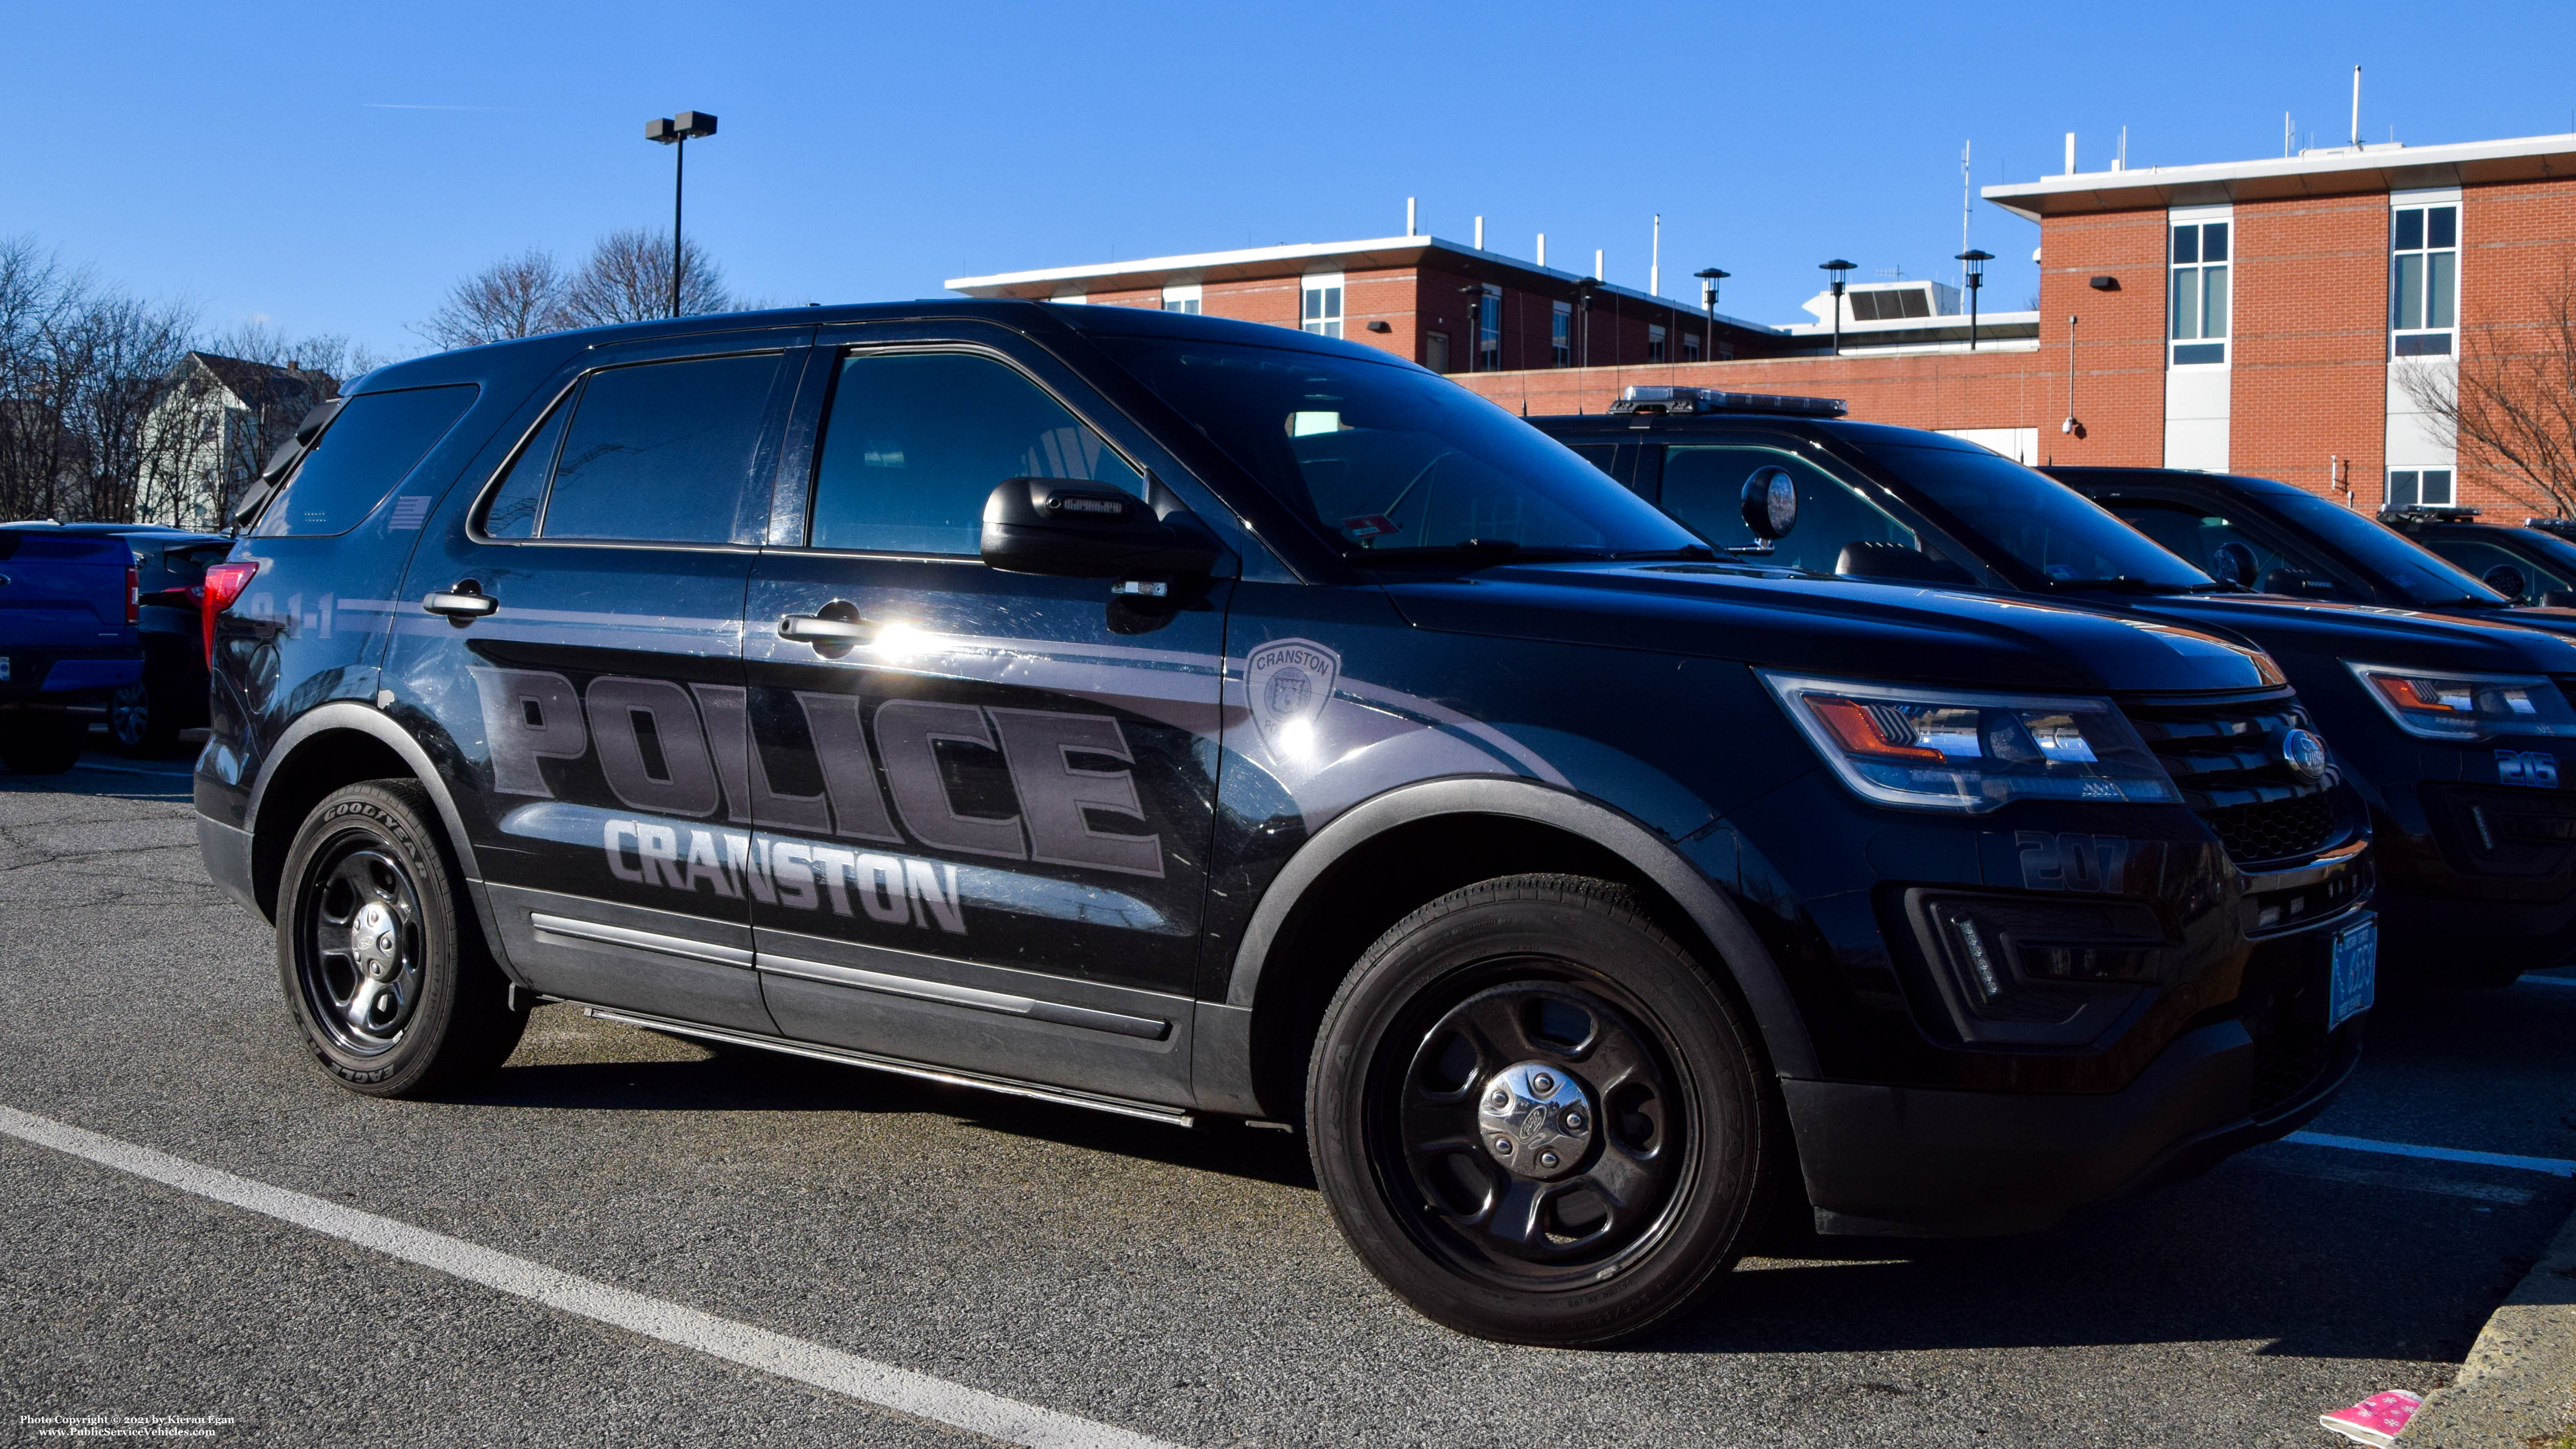 A photo  of Cranston Police
            Cruiser 207, a 2018 Ford Police Interceptor Utility             taken by Kieran Egan